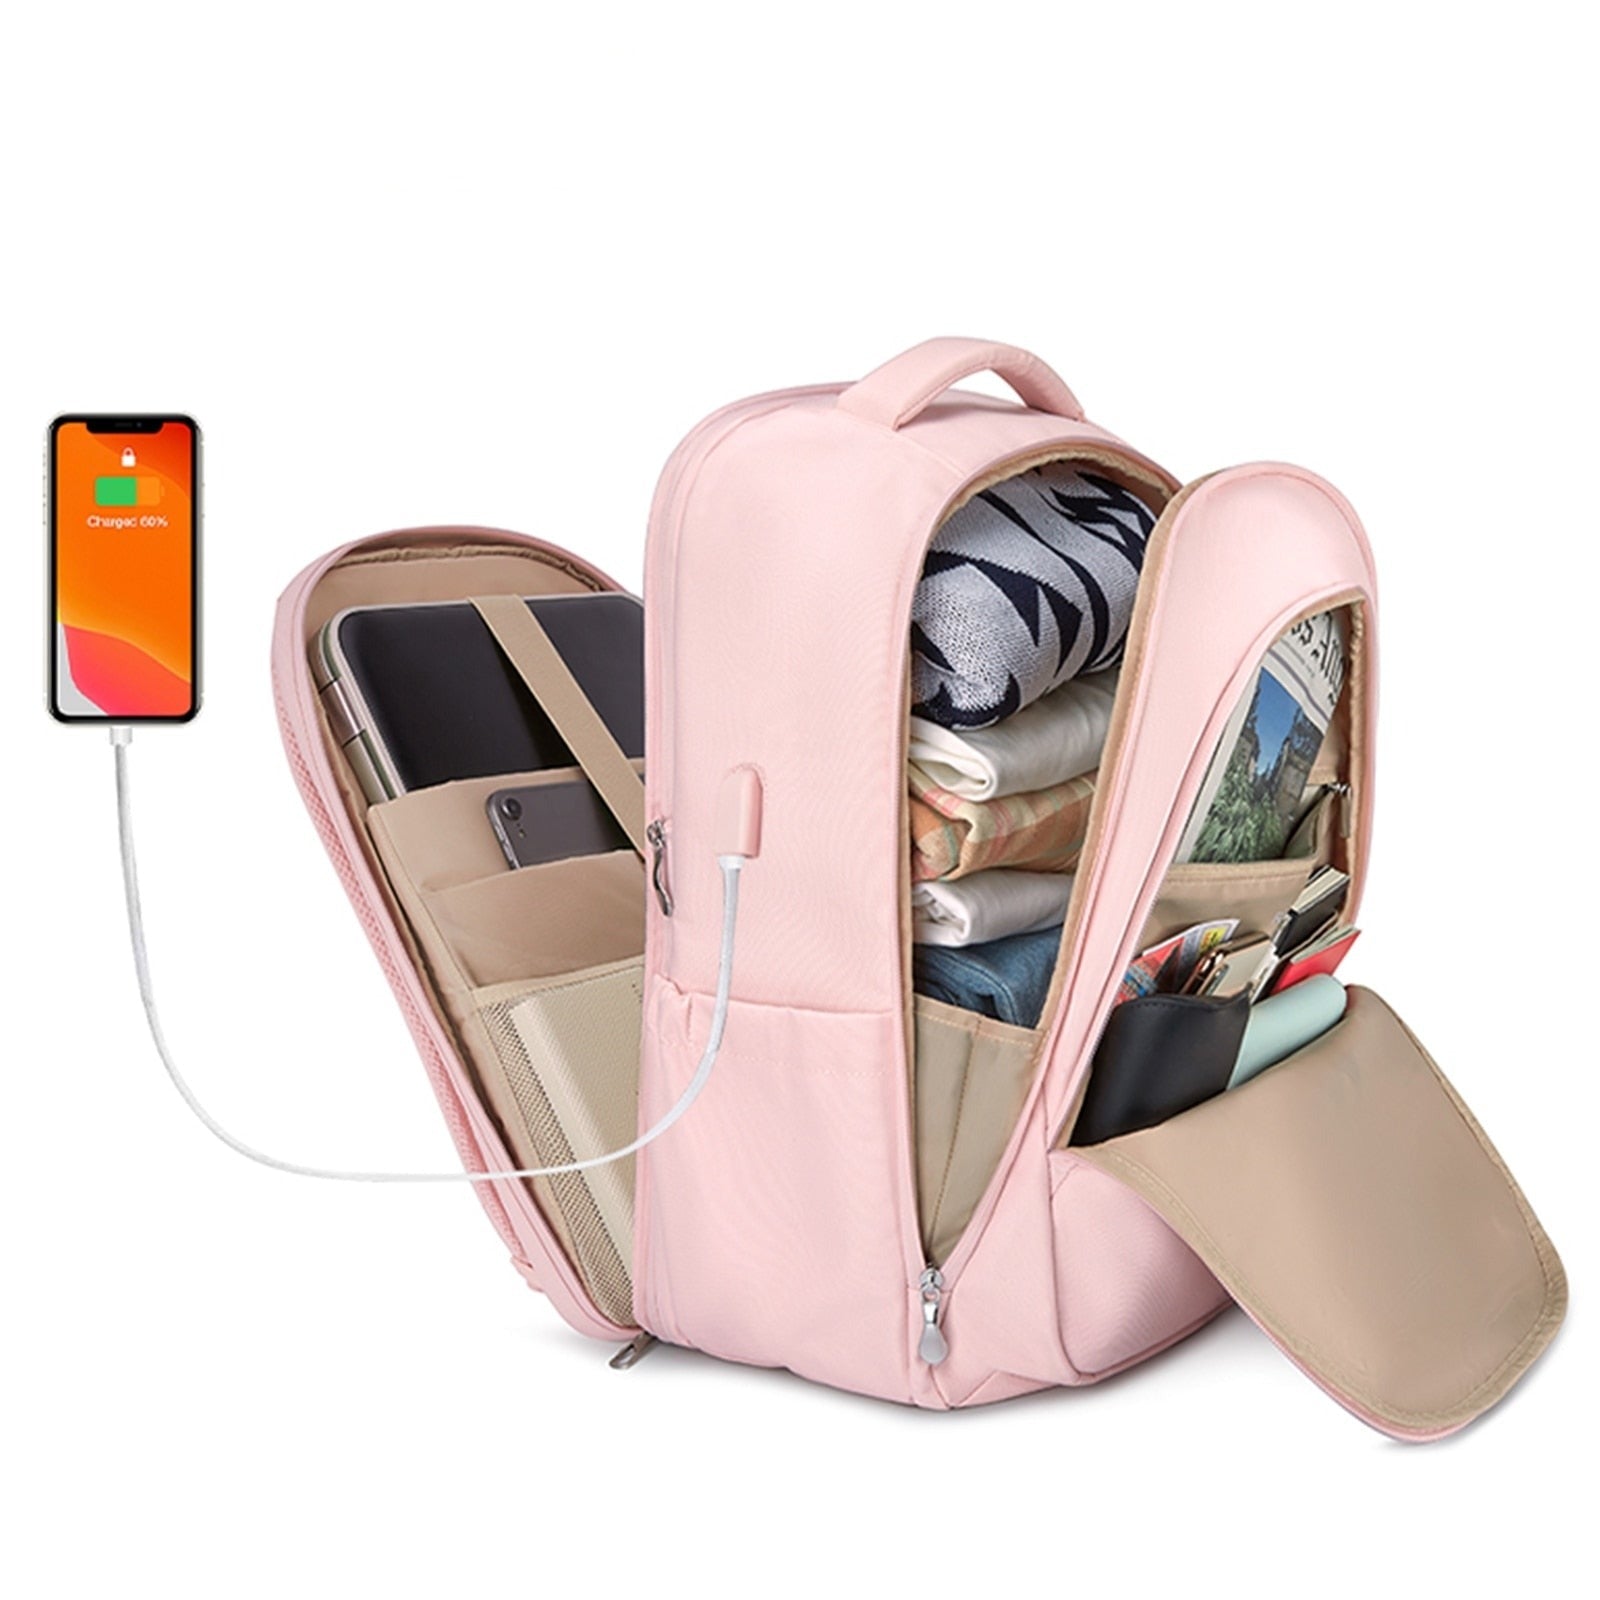 School/Business Smart Waterproof Laptop Backpacks with USB Charging Port